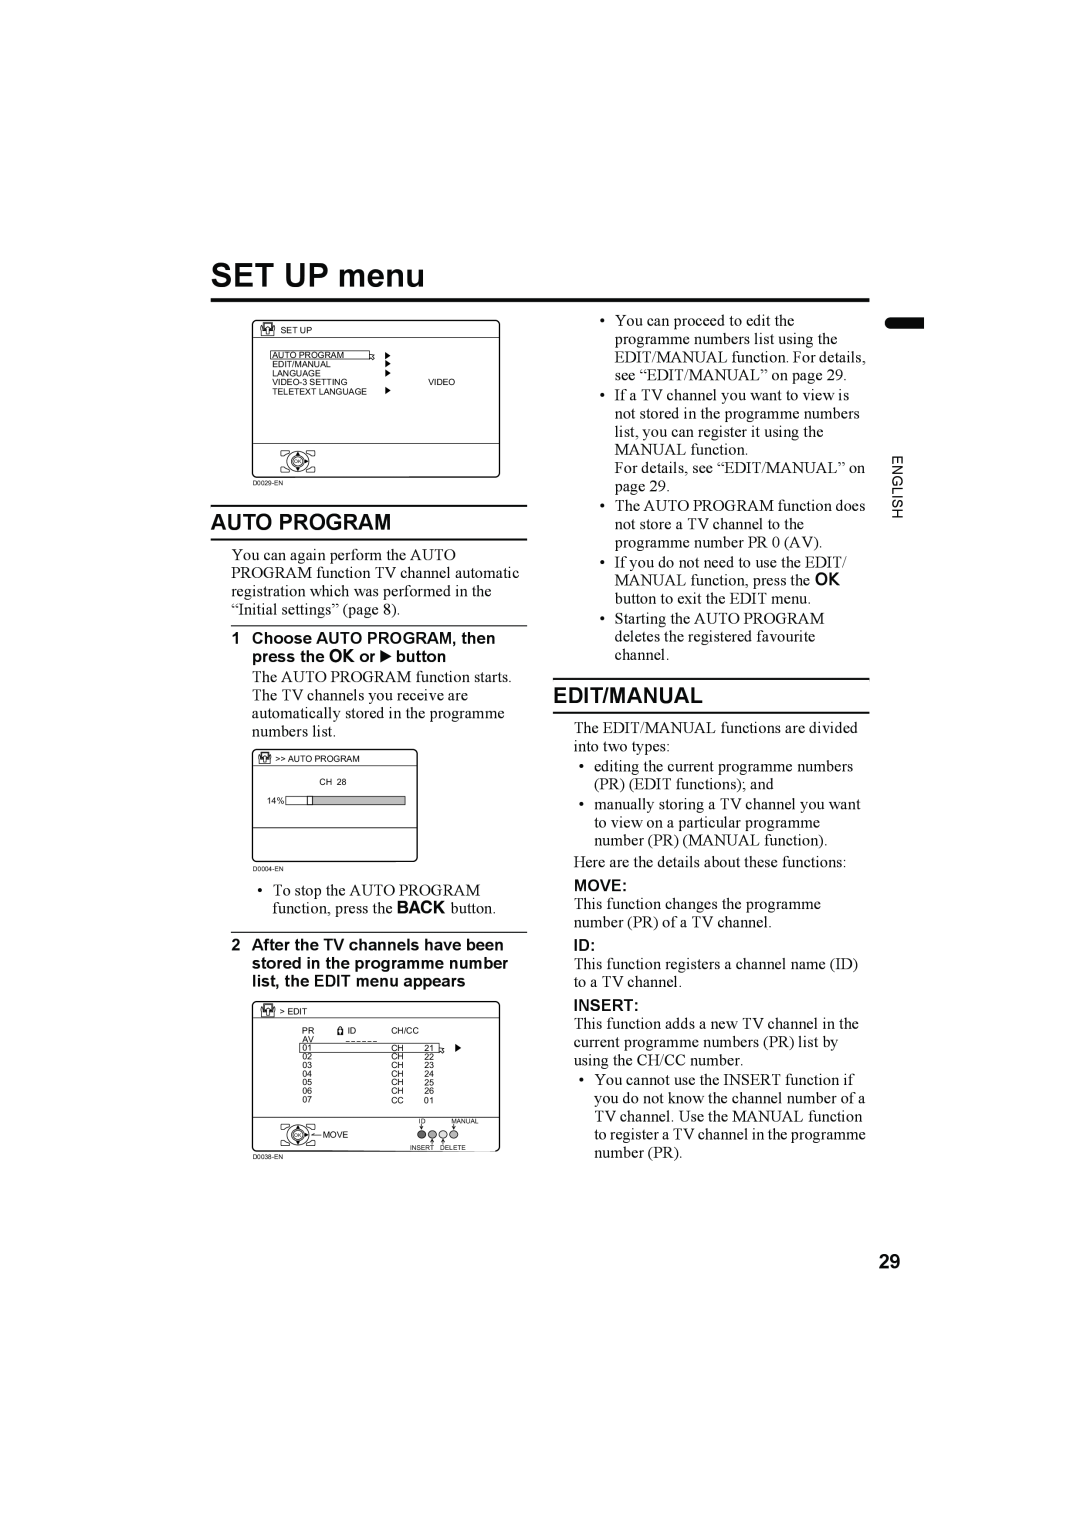 JVC LT-32AX5 manual SET UP menu, Auto Program, Edit/Manual, Choose AUTO PROGRAM, then press the aor 3 button, Move, Insert 